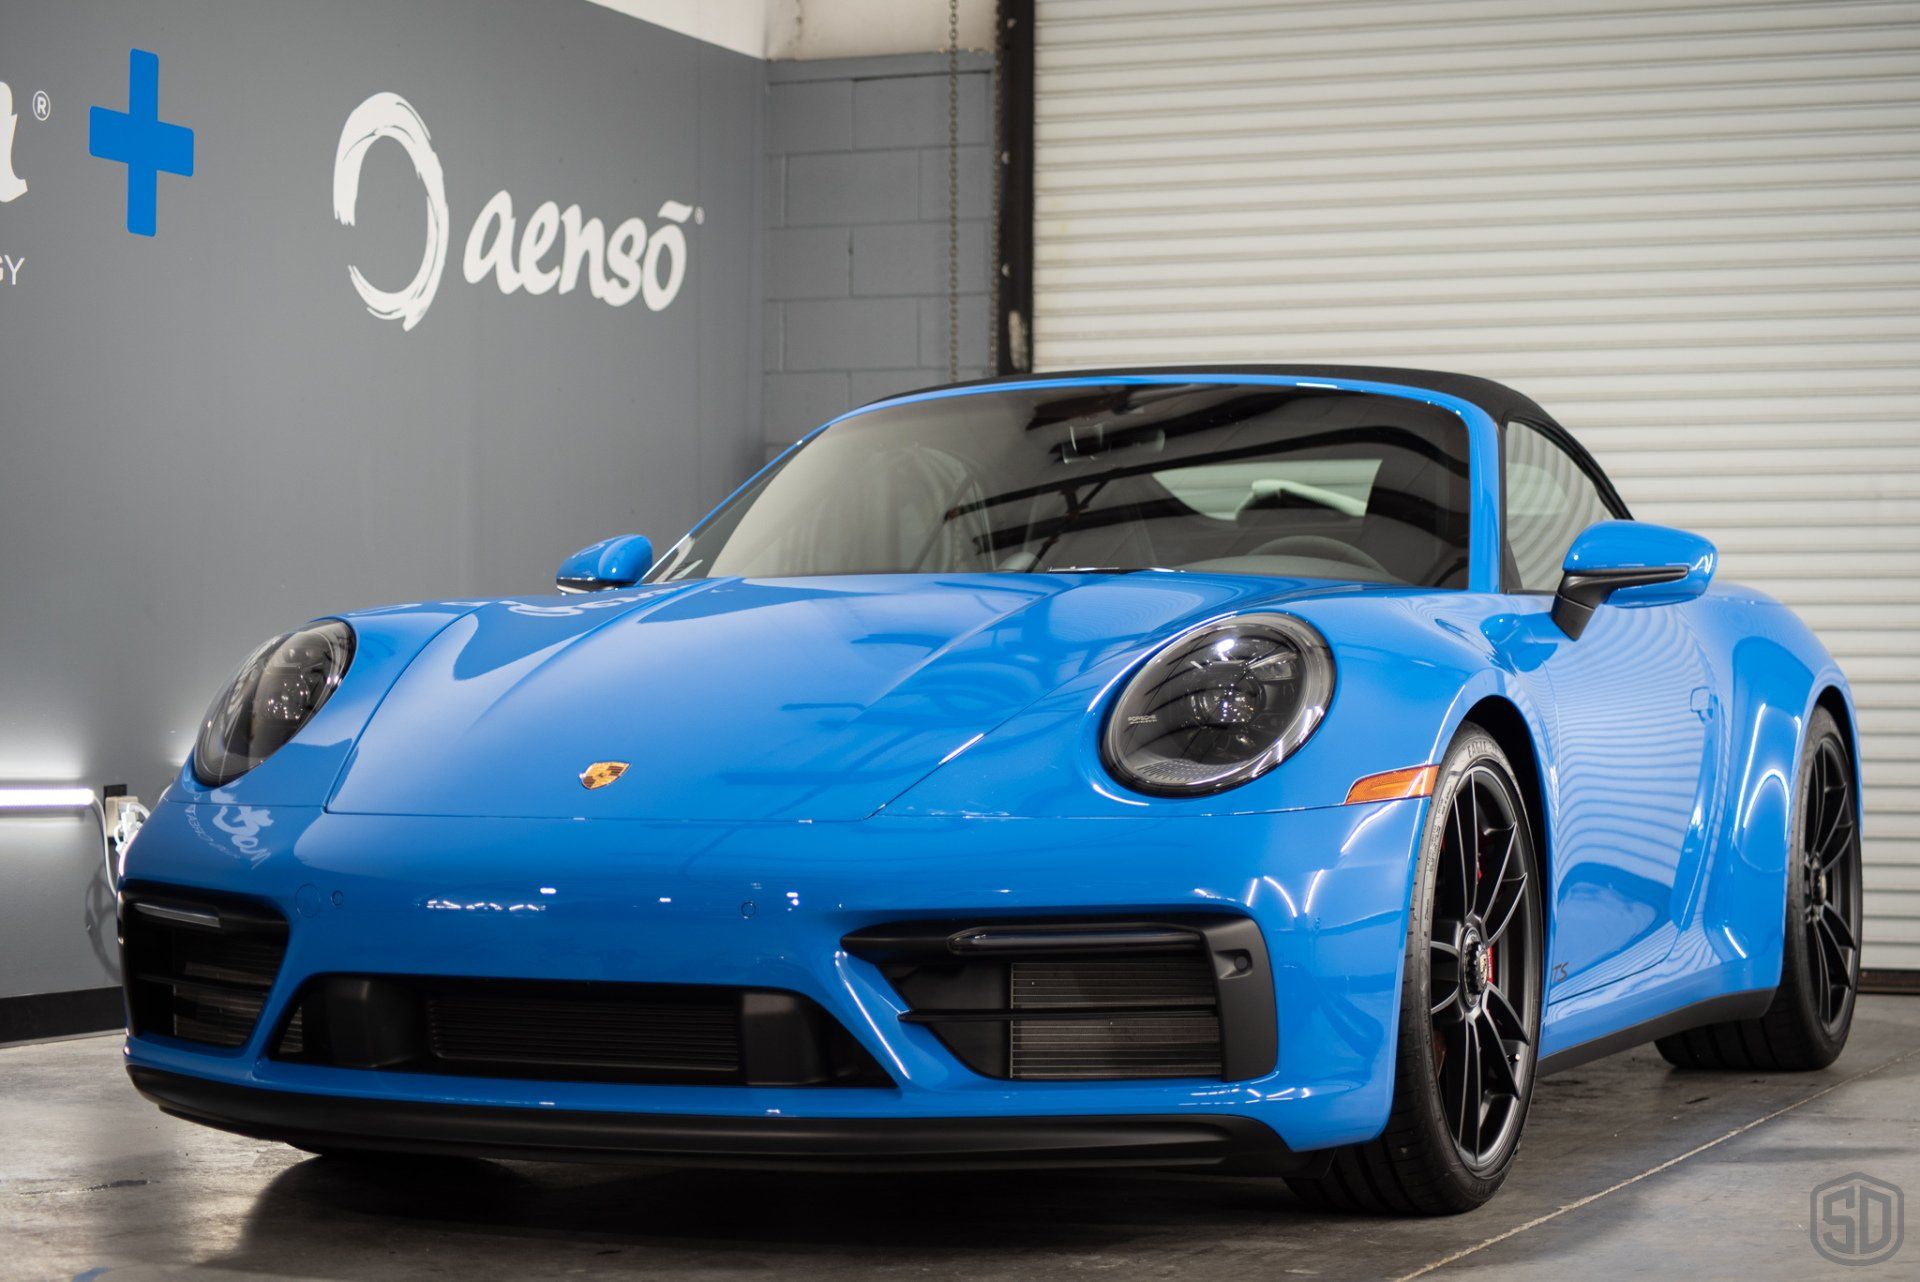 Shark Blue Porsche 911 Carrera GTS Detailing, Paint Correction, Paint Protection Film, Aenso Gleam Spray Sealant Orlando, FL